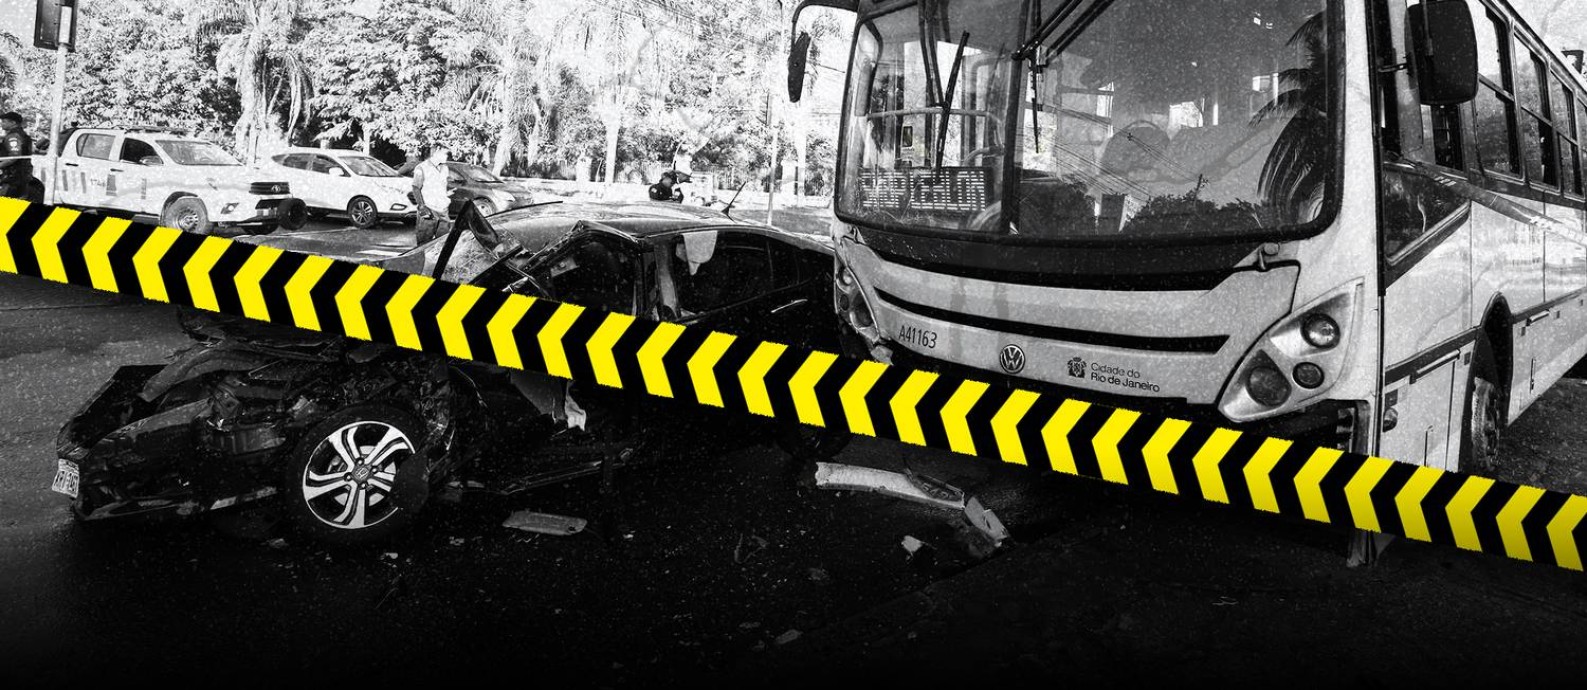 Brasil vive epidemia de mortes no trânsito Foto: Arte